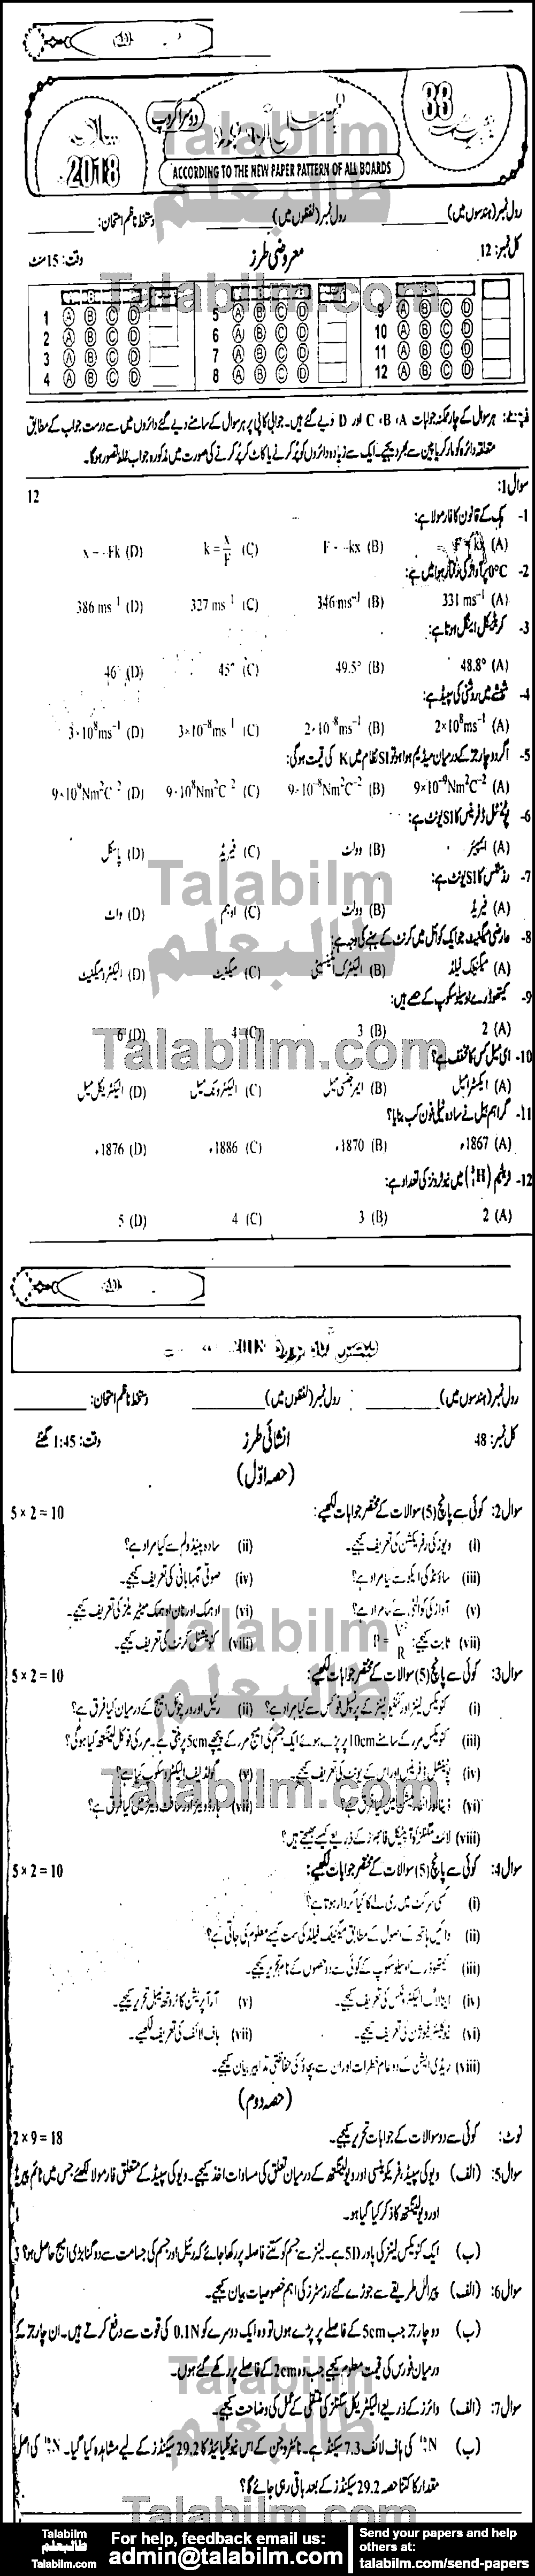 Physics 0 past paper for Urdu Medium 2018 Group-II